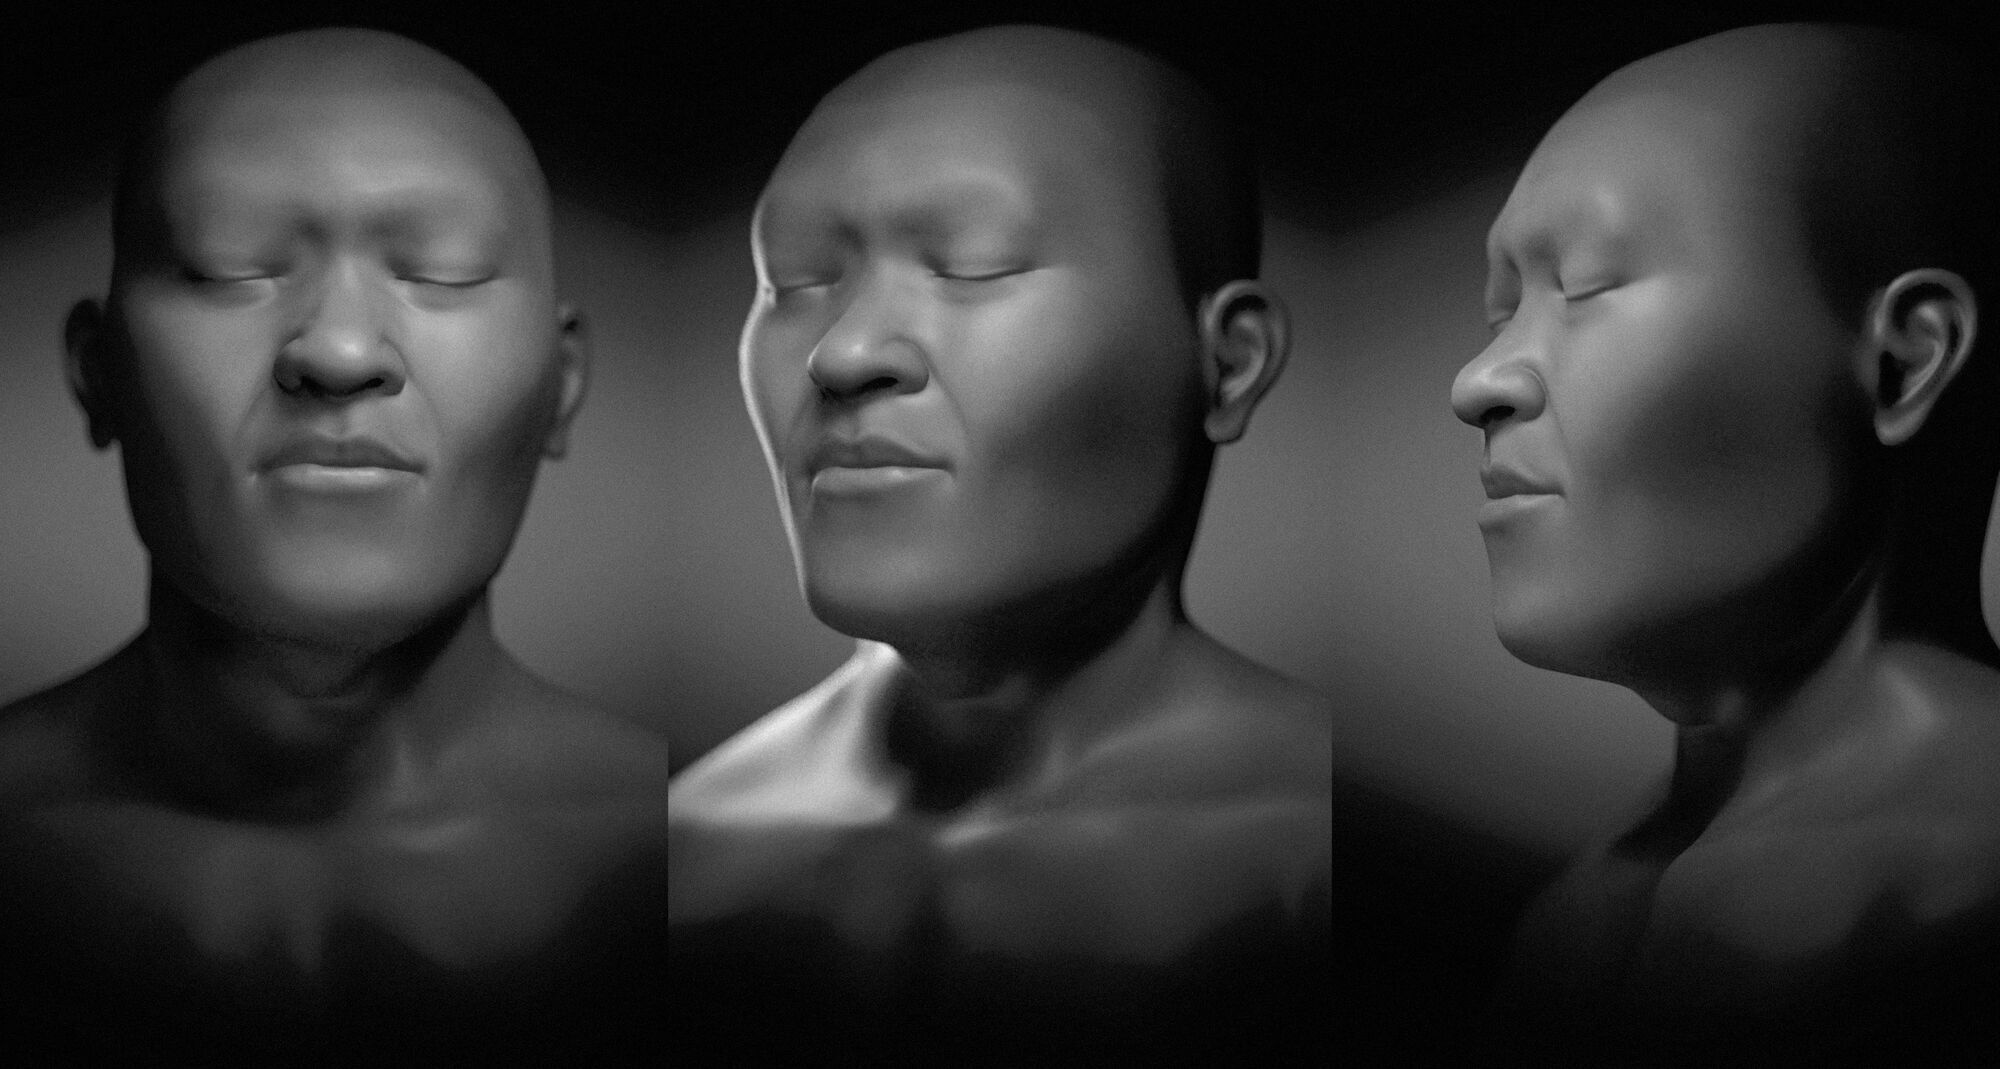 3D model of an ancient human face.